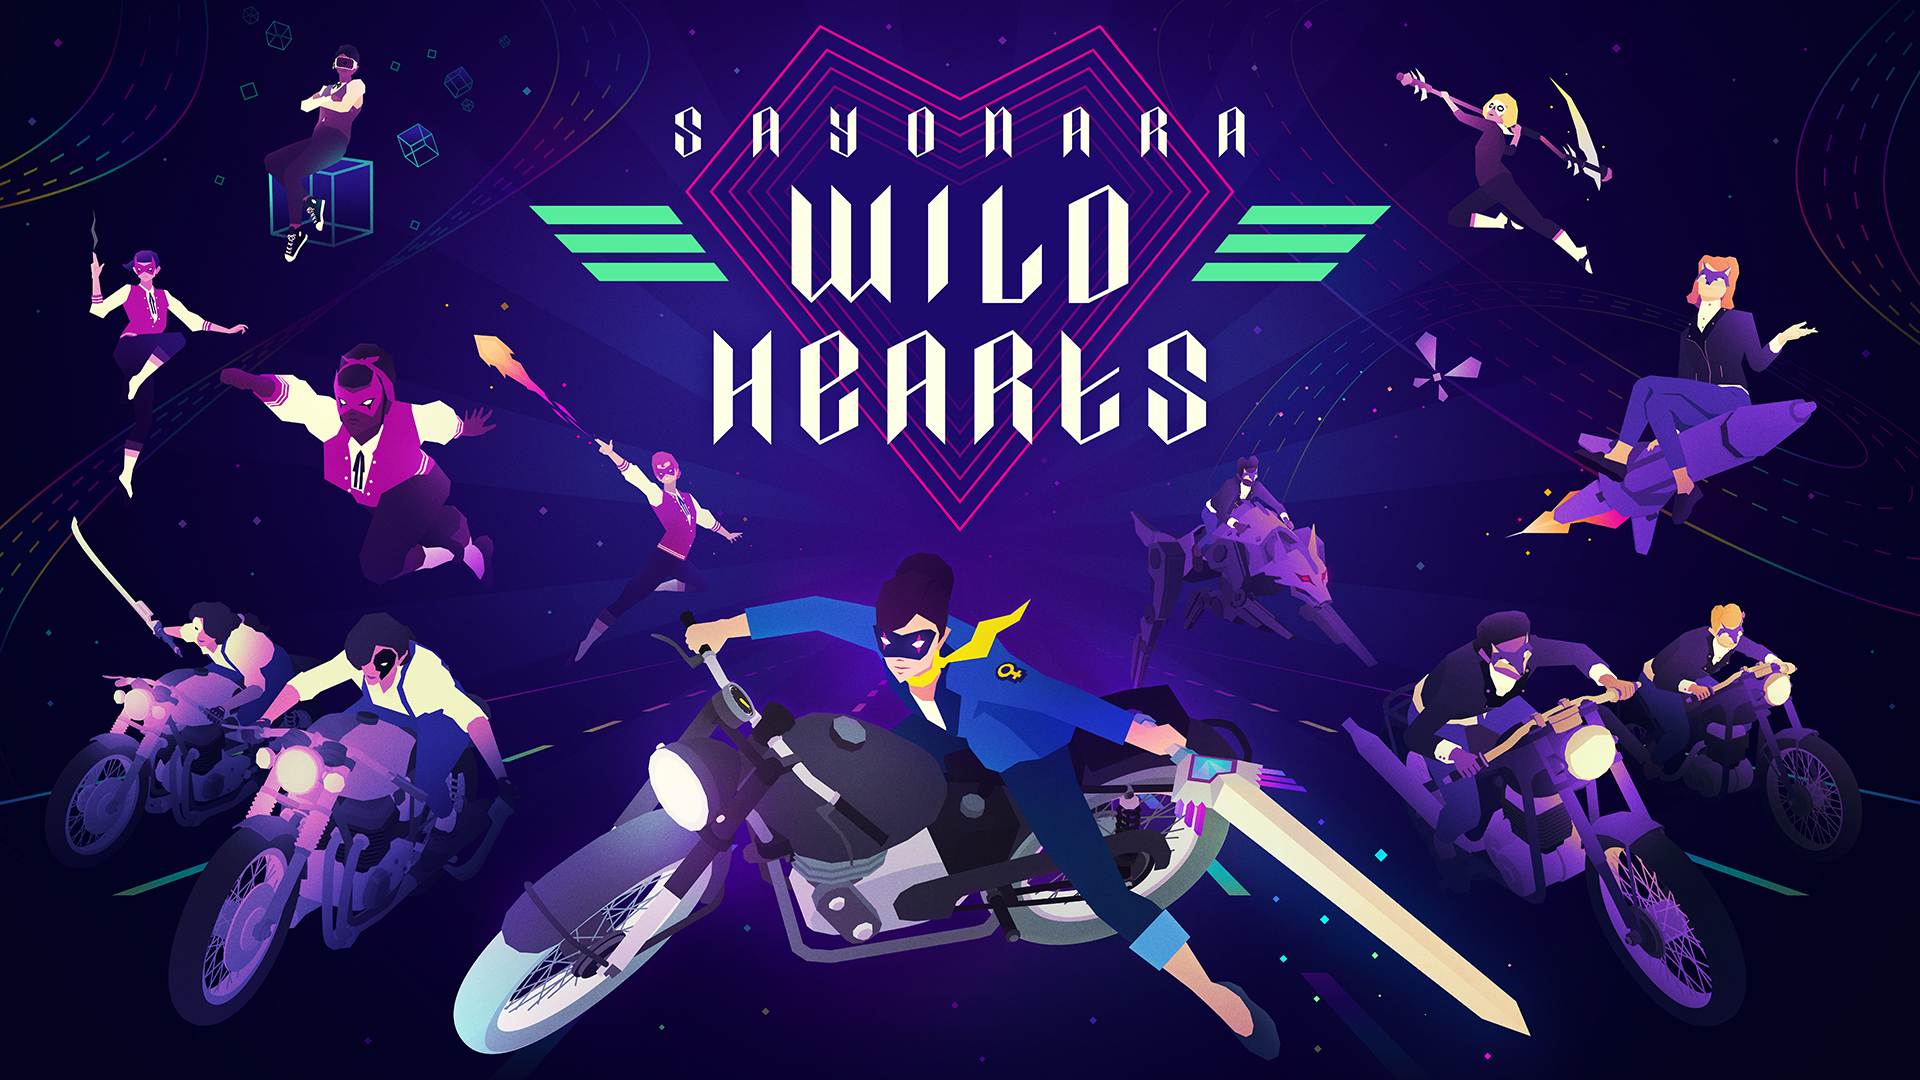 sayonara wild hearts the game awards 2019 nominees